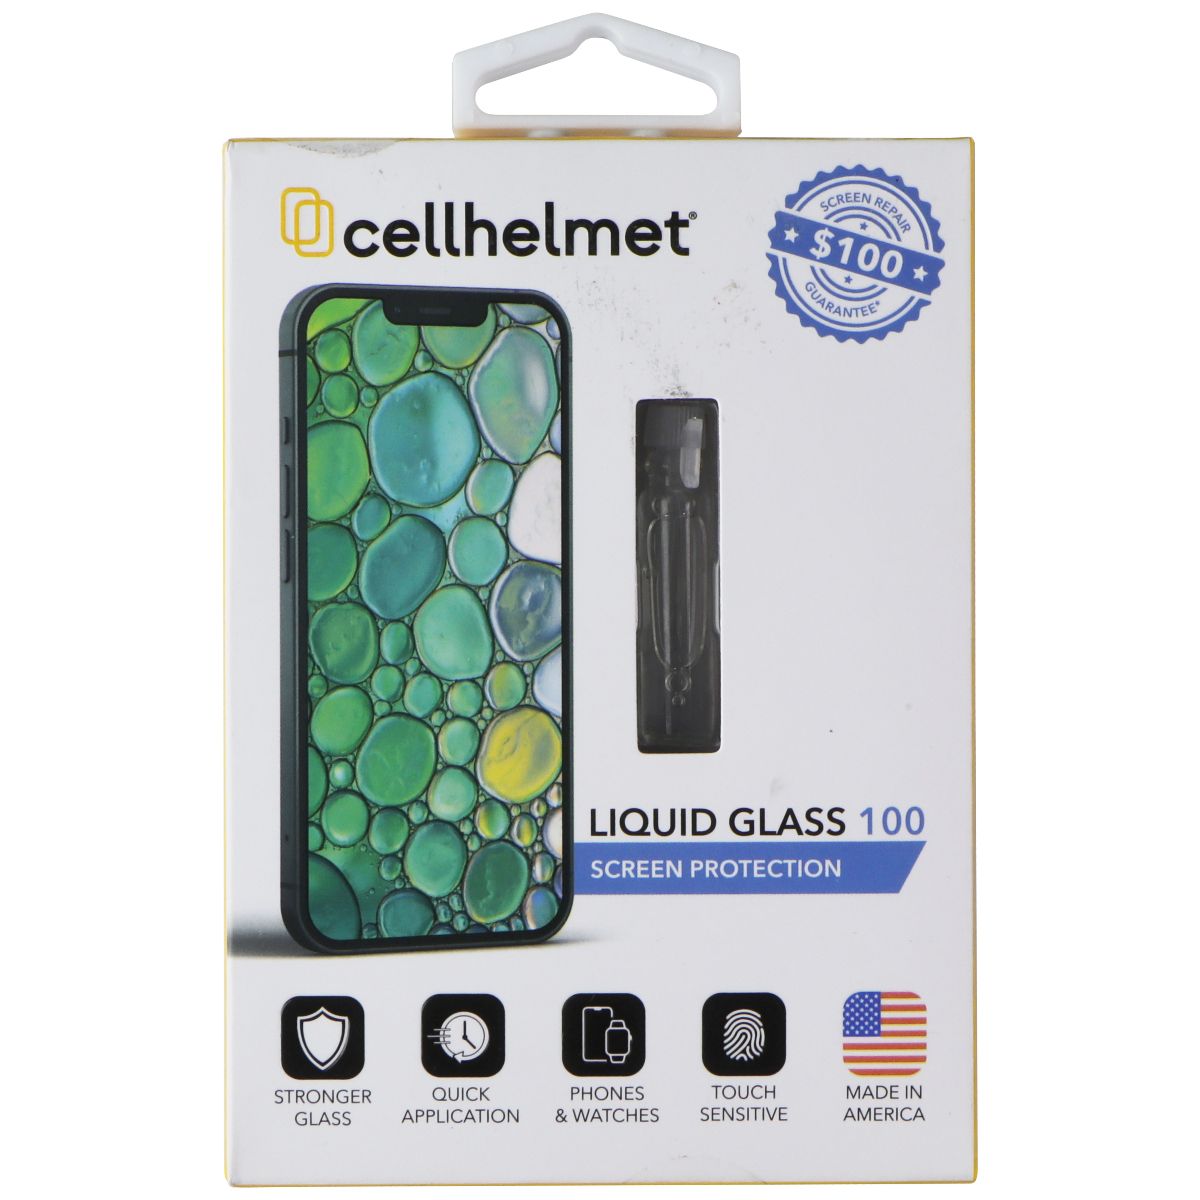 CellHelmet Liquid Glass 100 Screen Protection